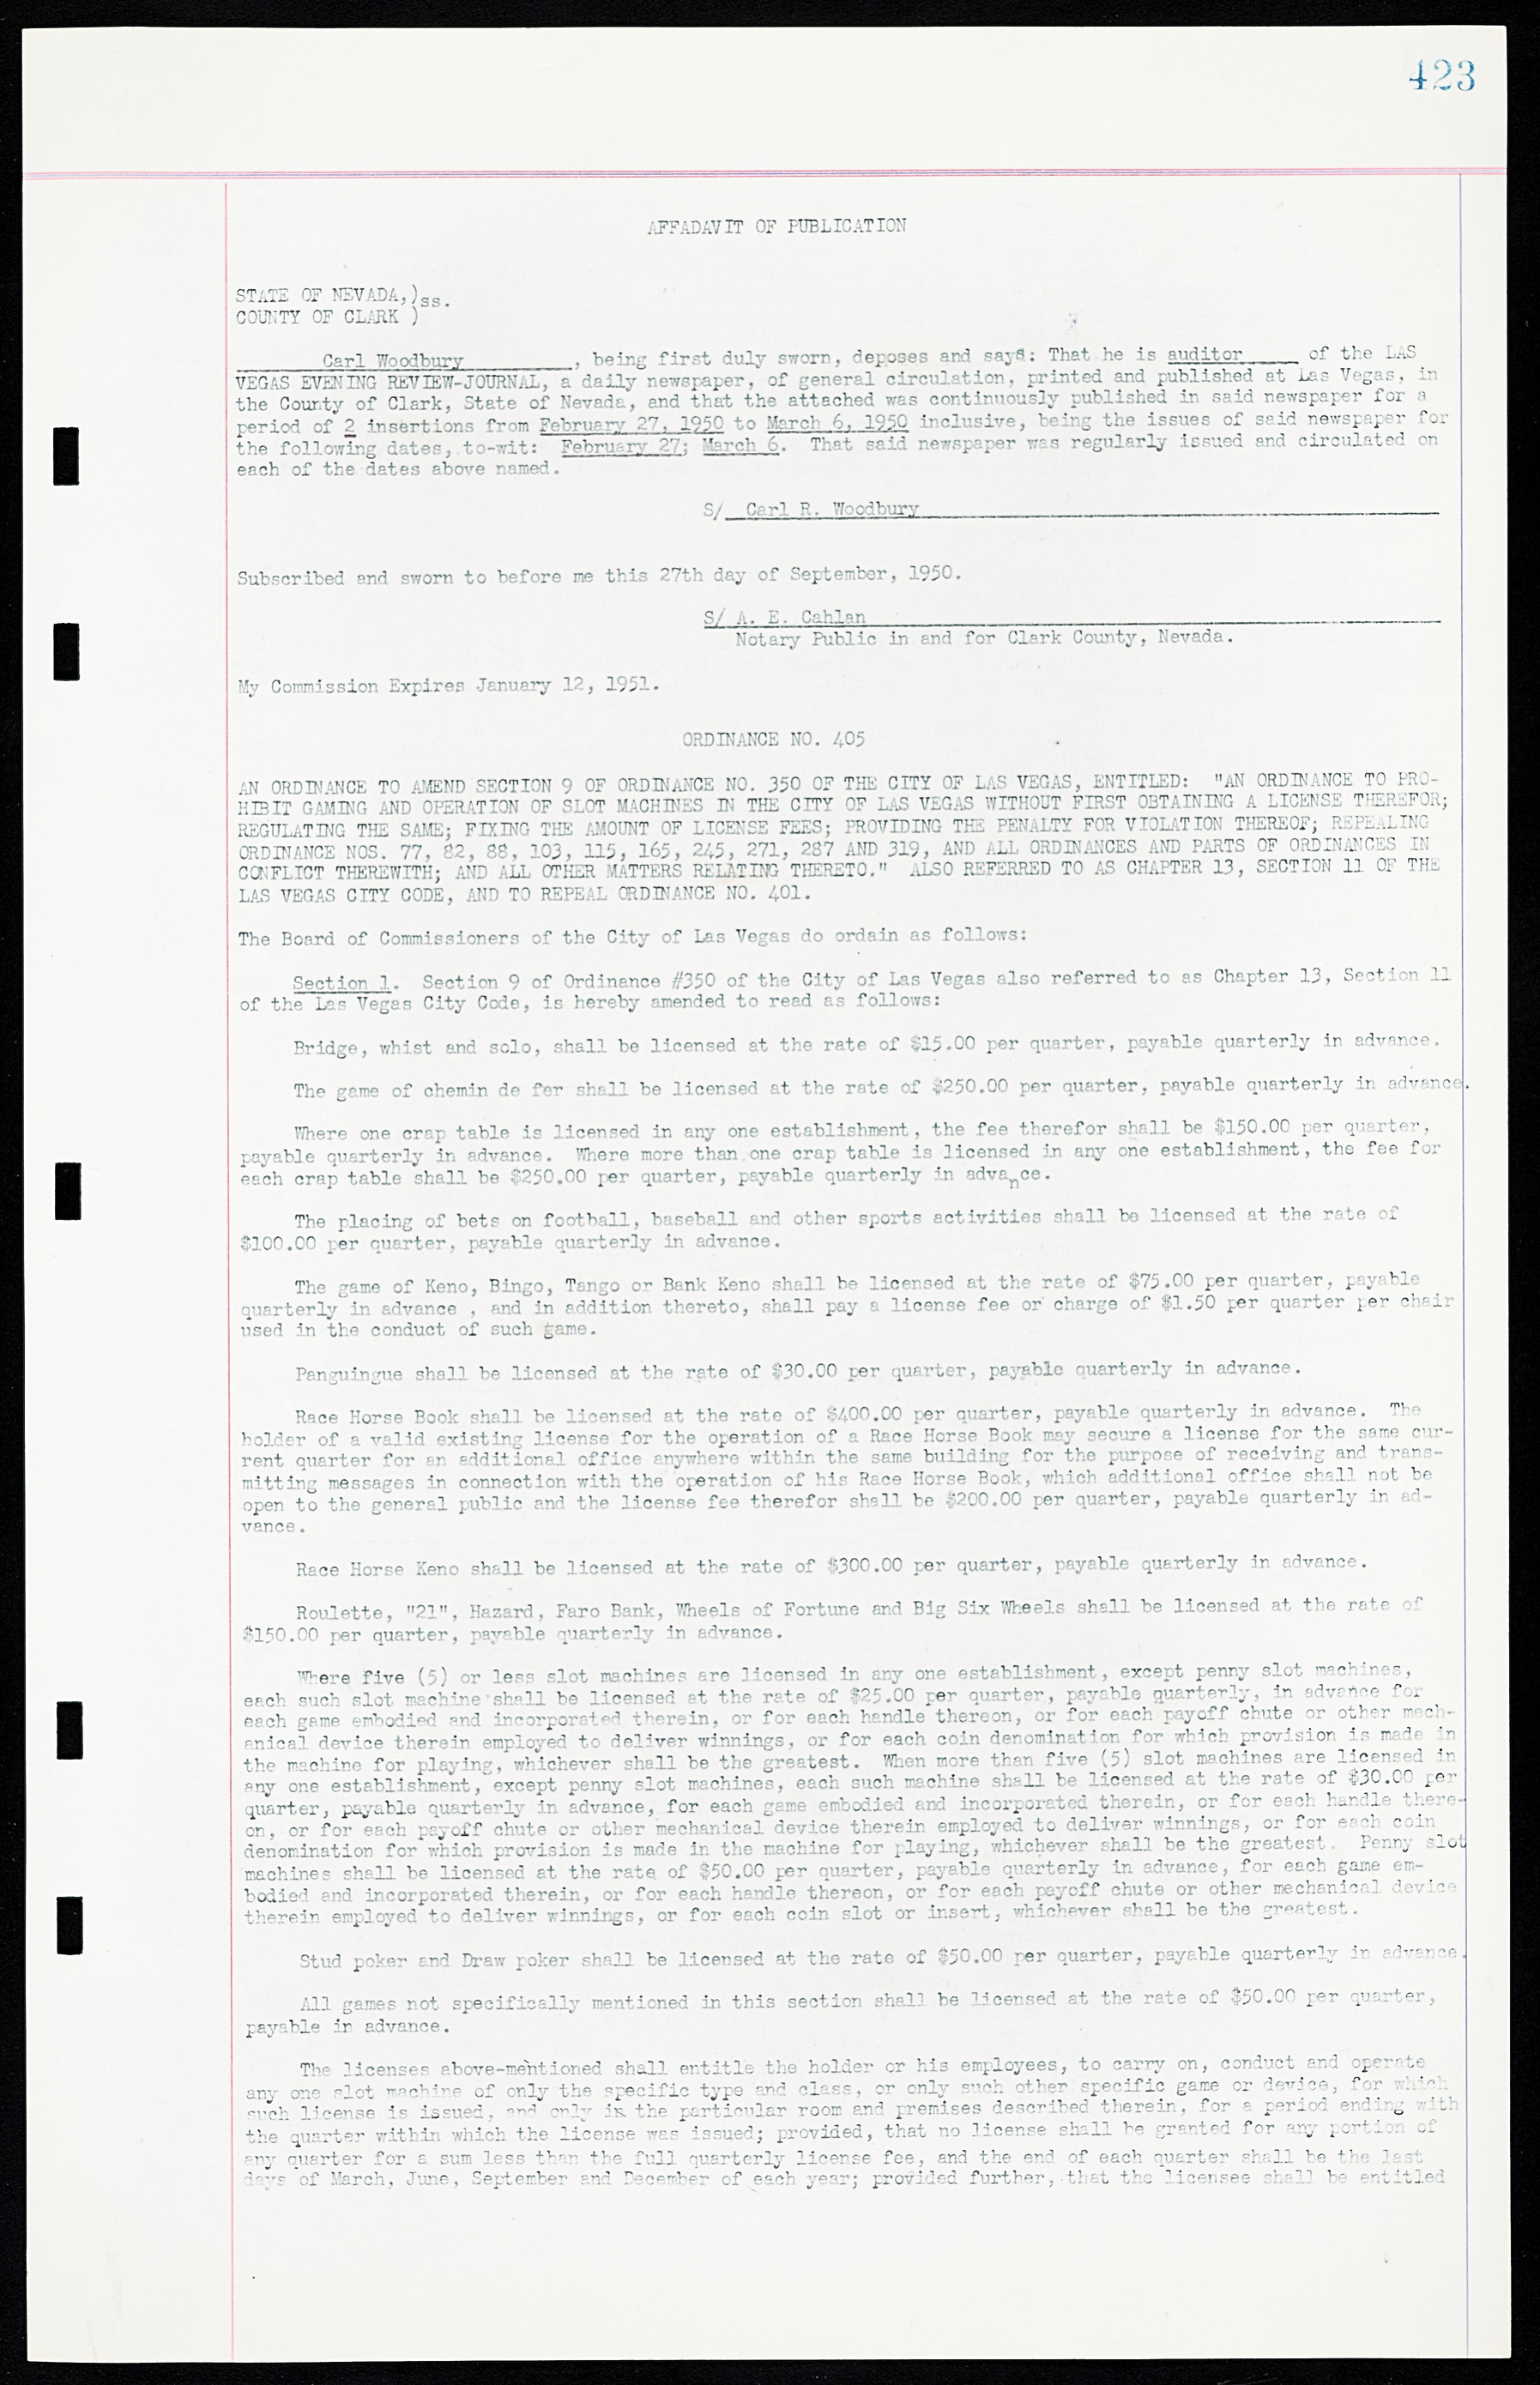 Las Vegas City Ordinances, March 31, 1933 to October 25, 1950, lvc000014-458